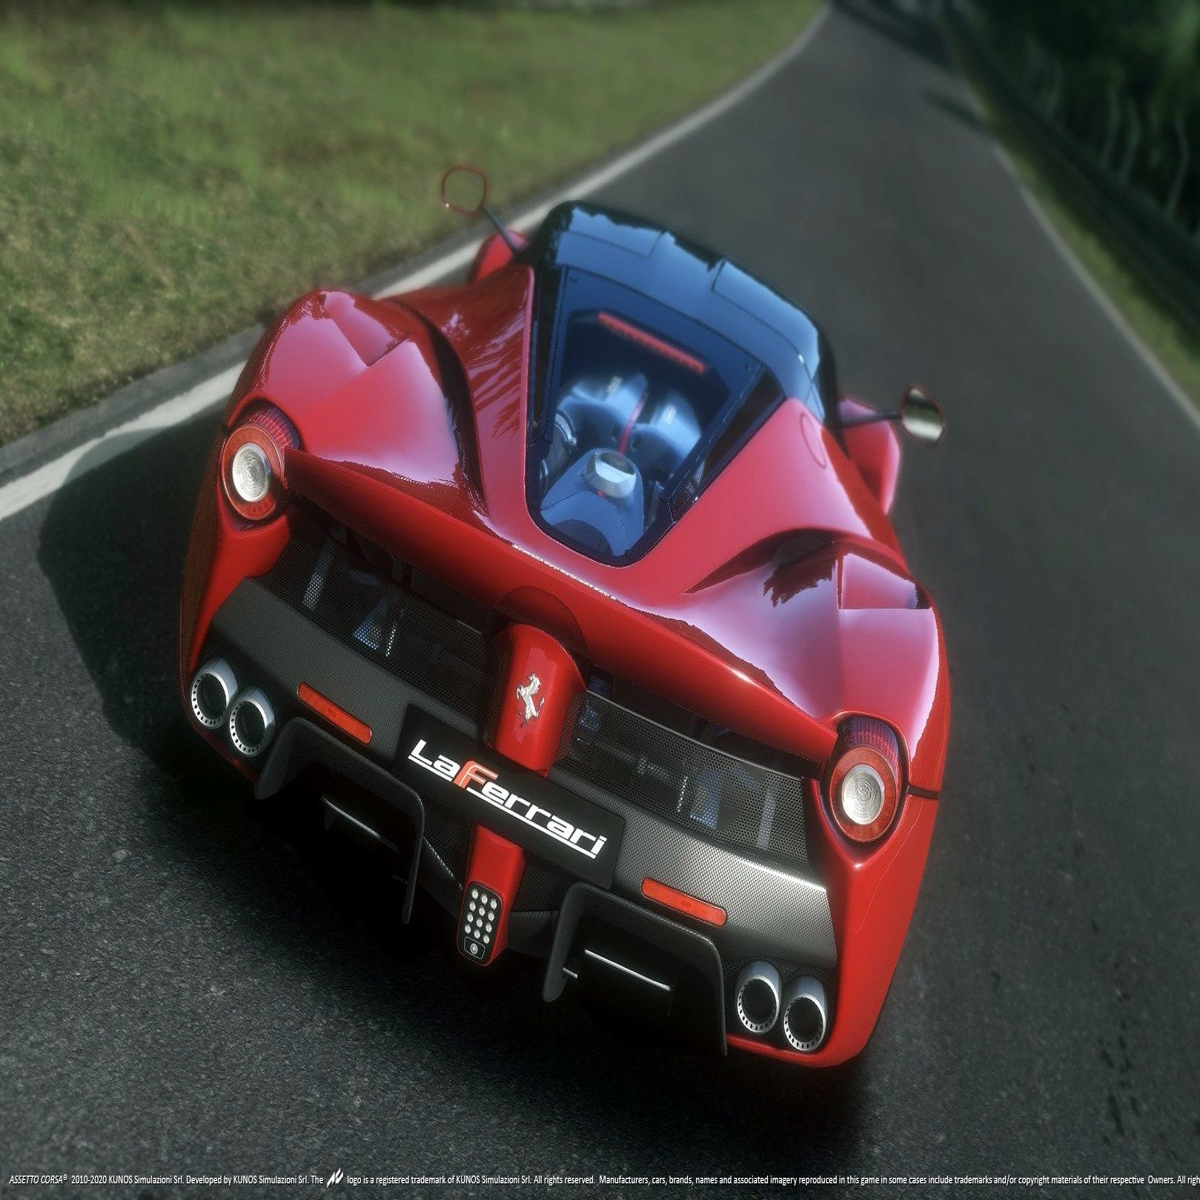 Assetto Corsa (PS4) - Ferrari FXX K Gameplay @ Spa Francorchamps [1080P  60FPS] 